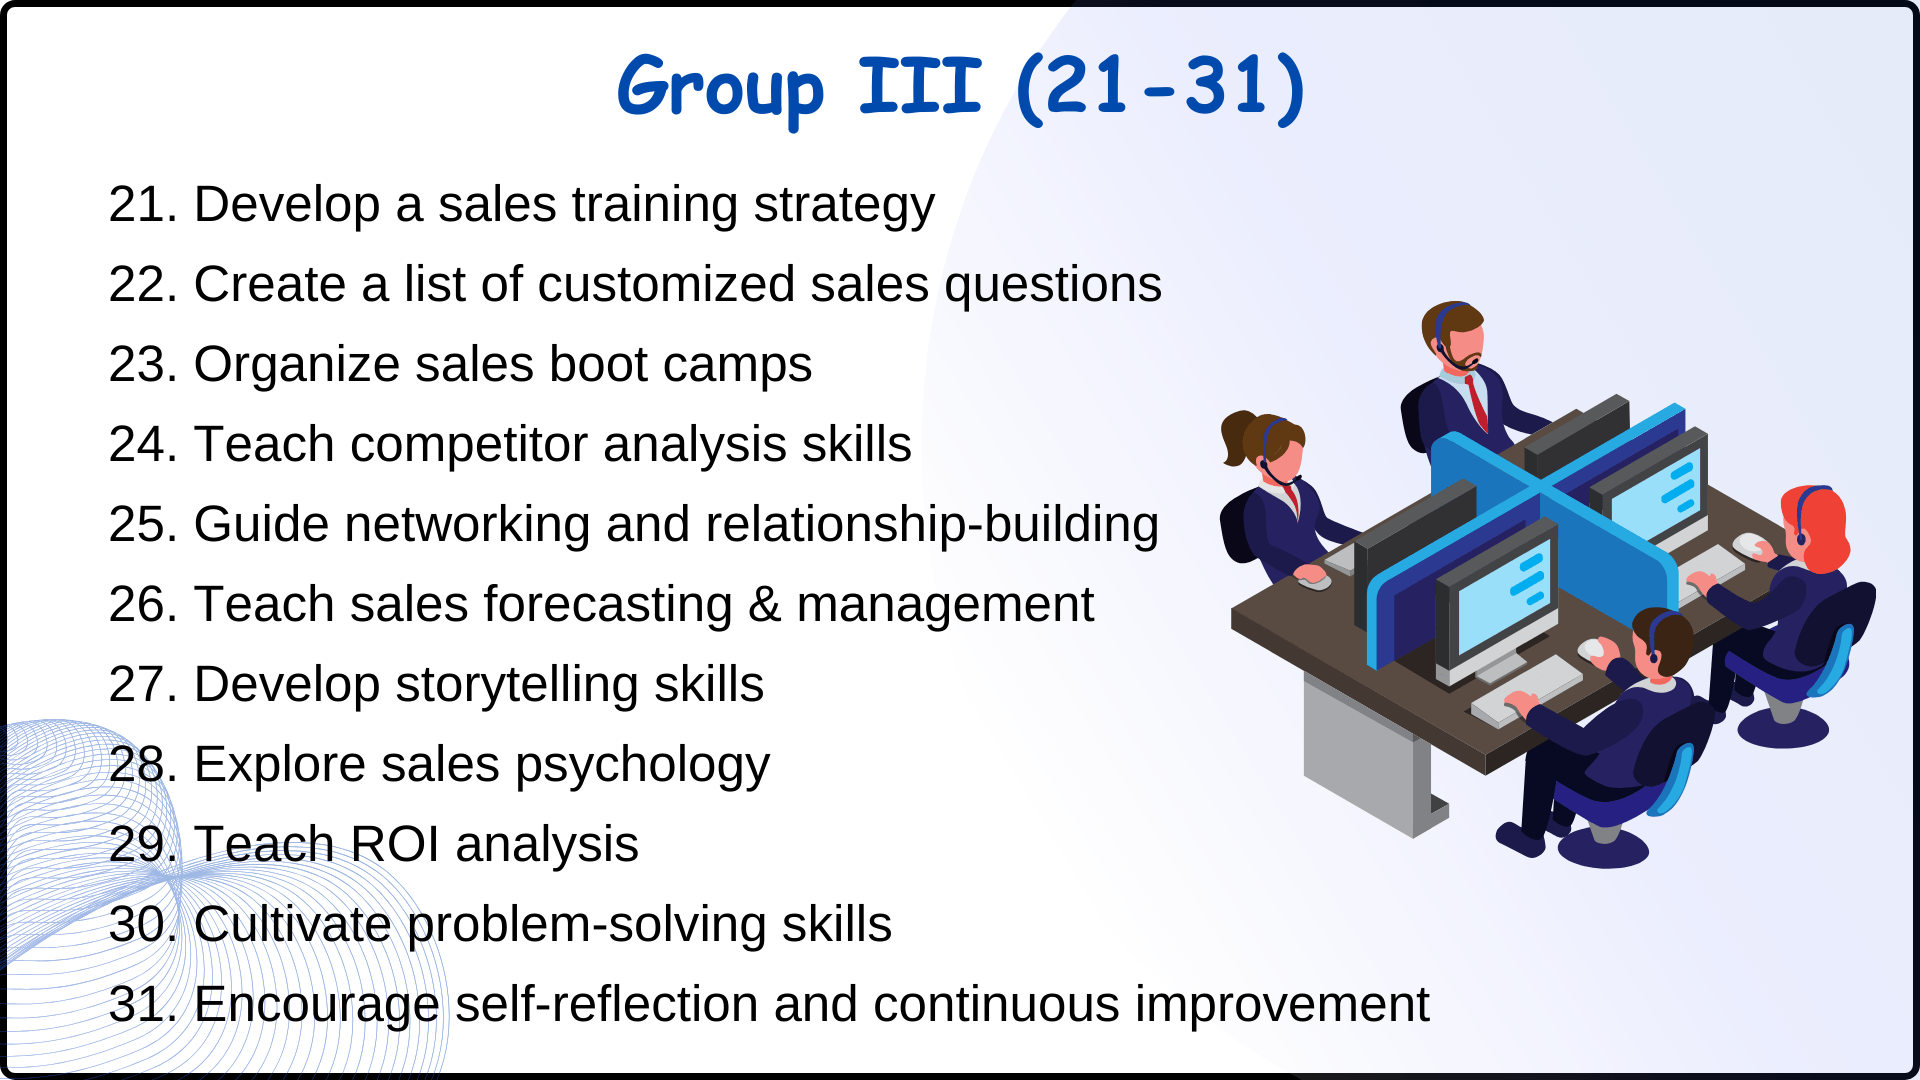 Sales training ideas Part-3